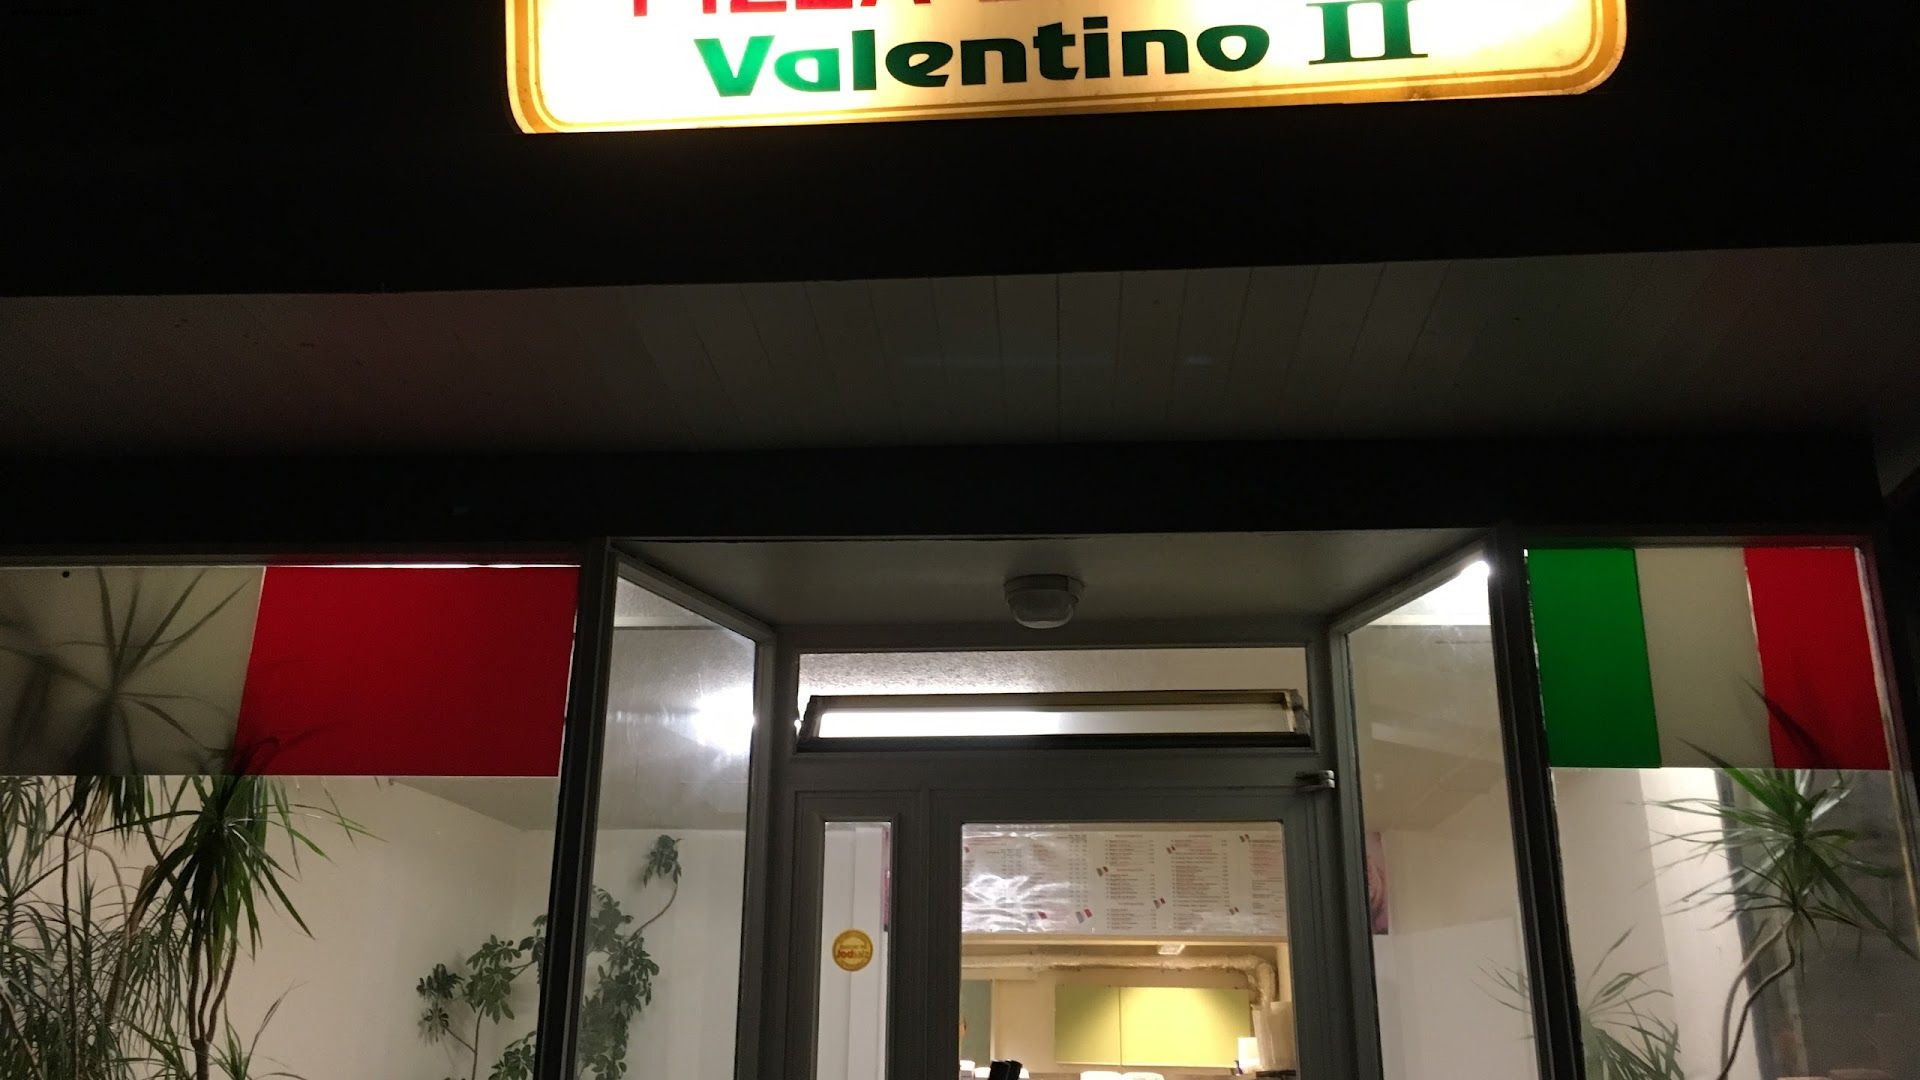 kant kom sammen Med det samme Pizzeria Valentino Germany Pizzeria Valentino Telephone, Photos, Video,  Contact, Address